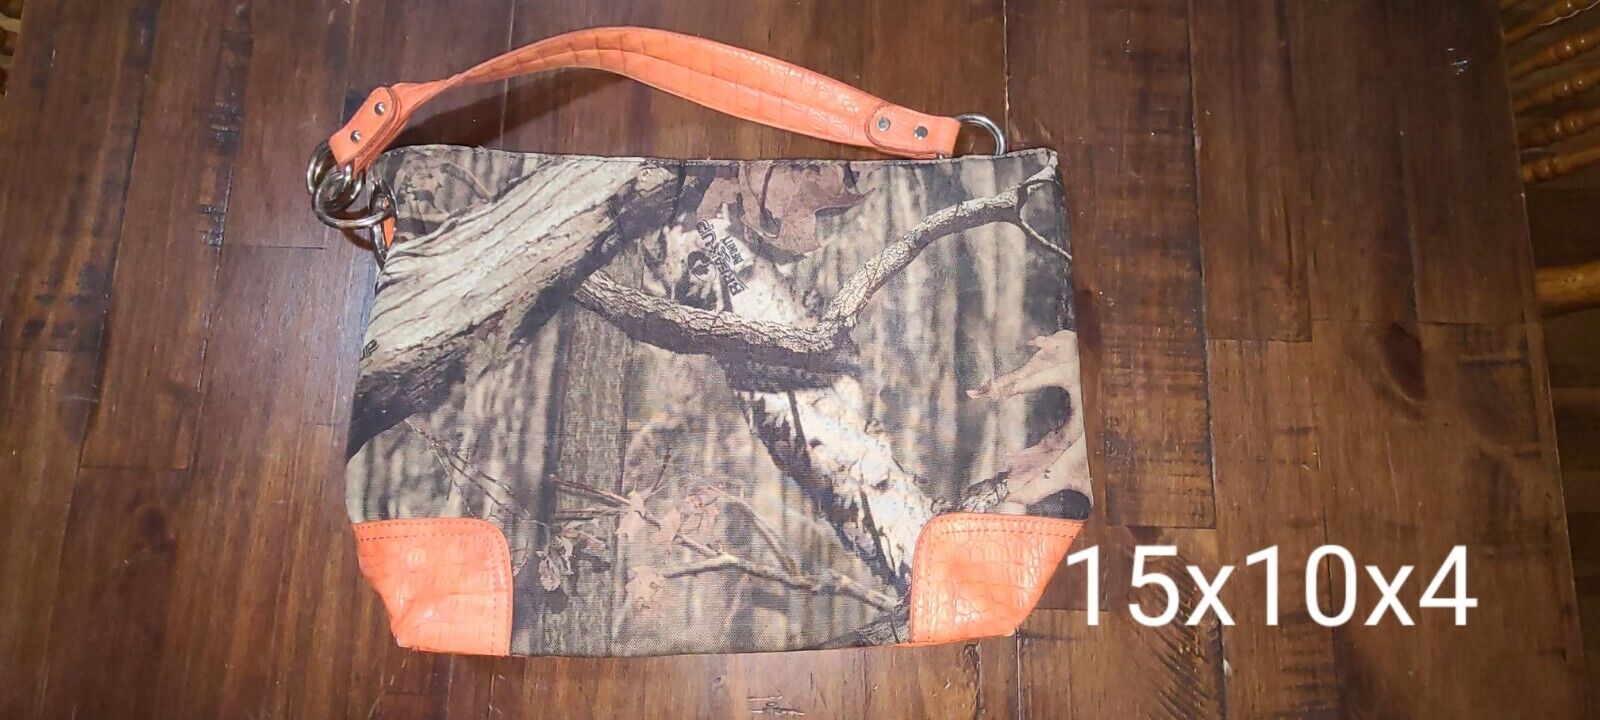 orange and camo purse bag - image 1